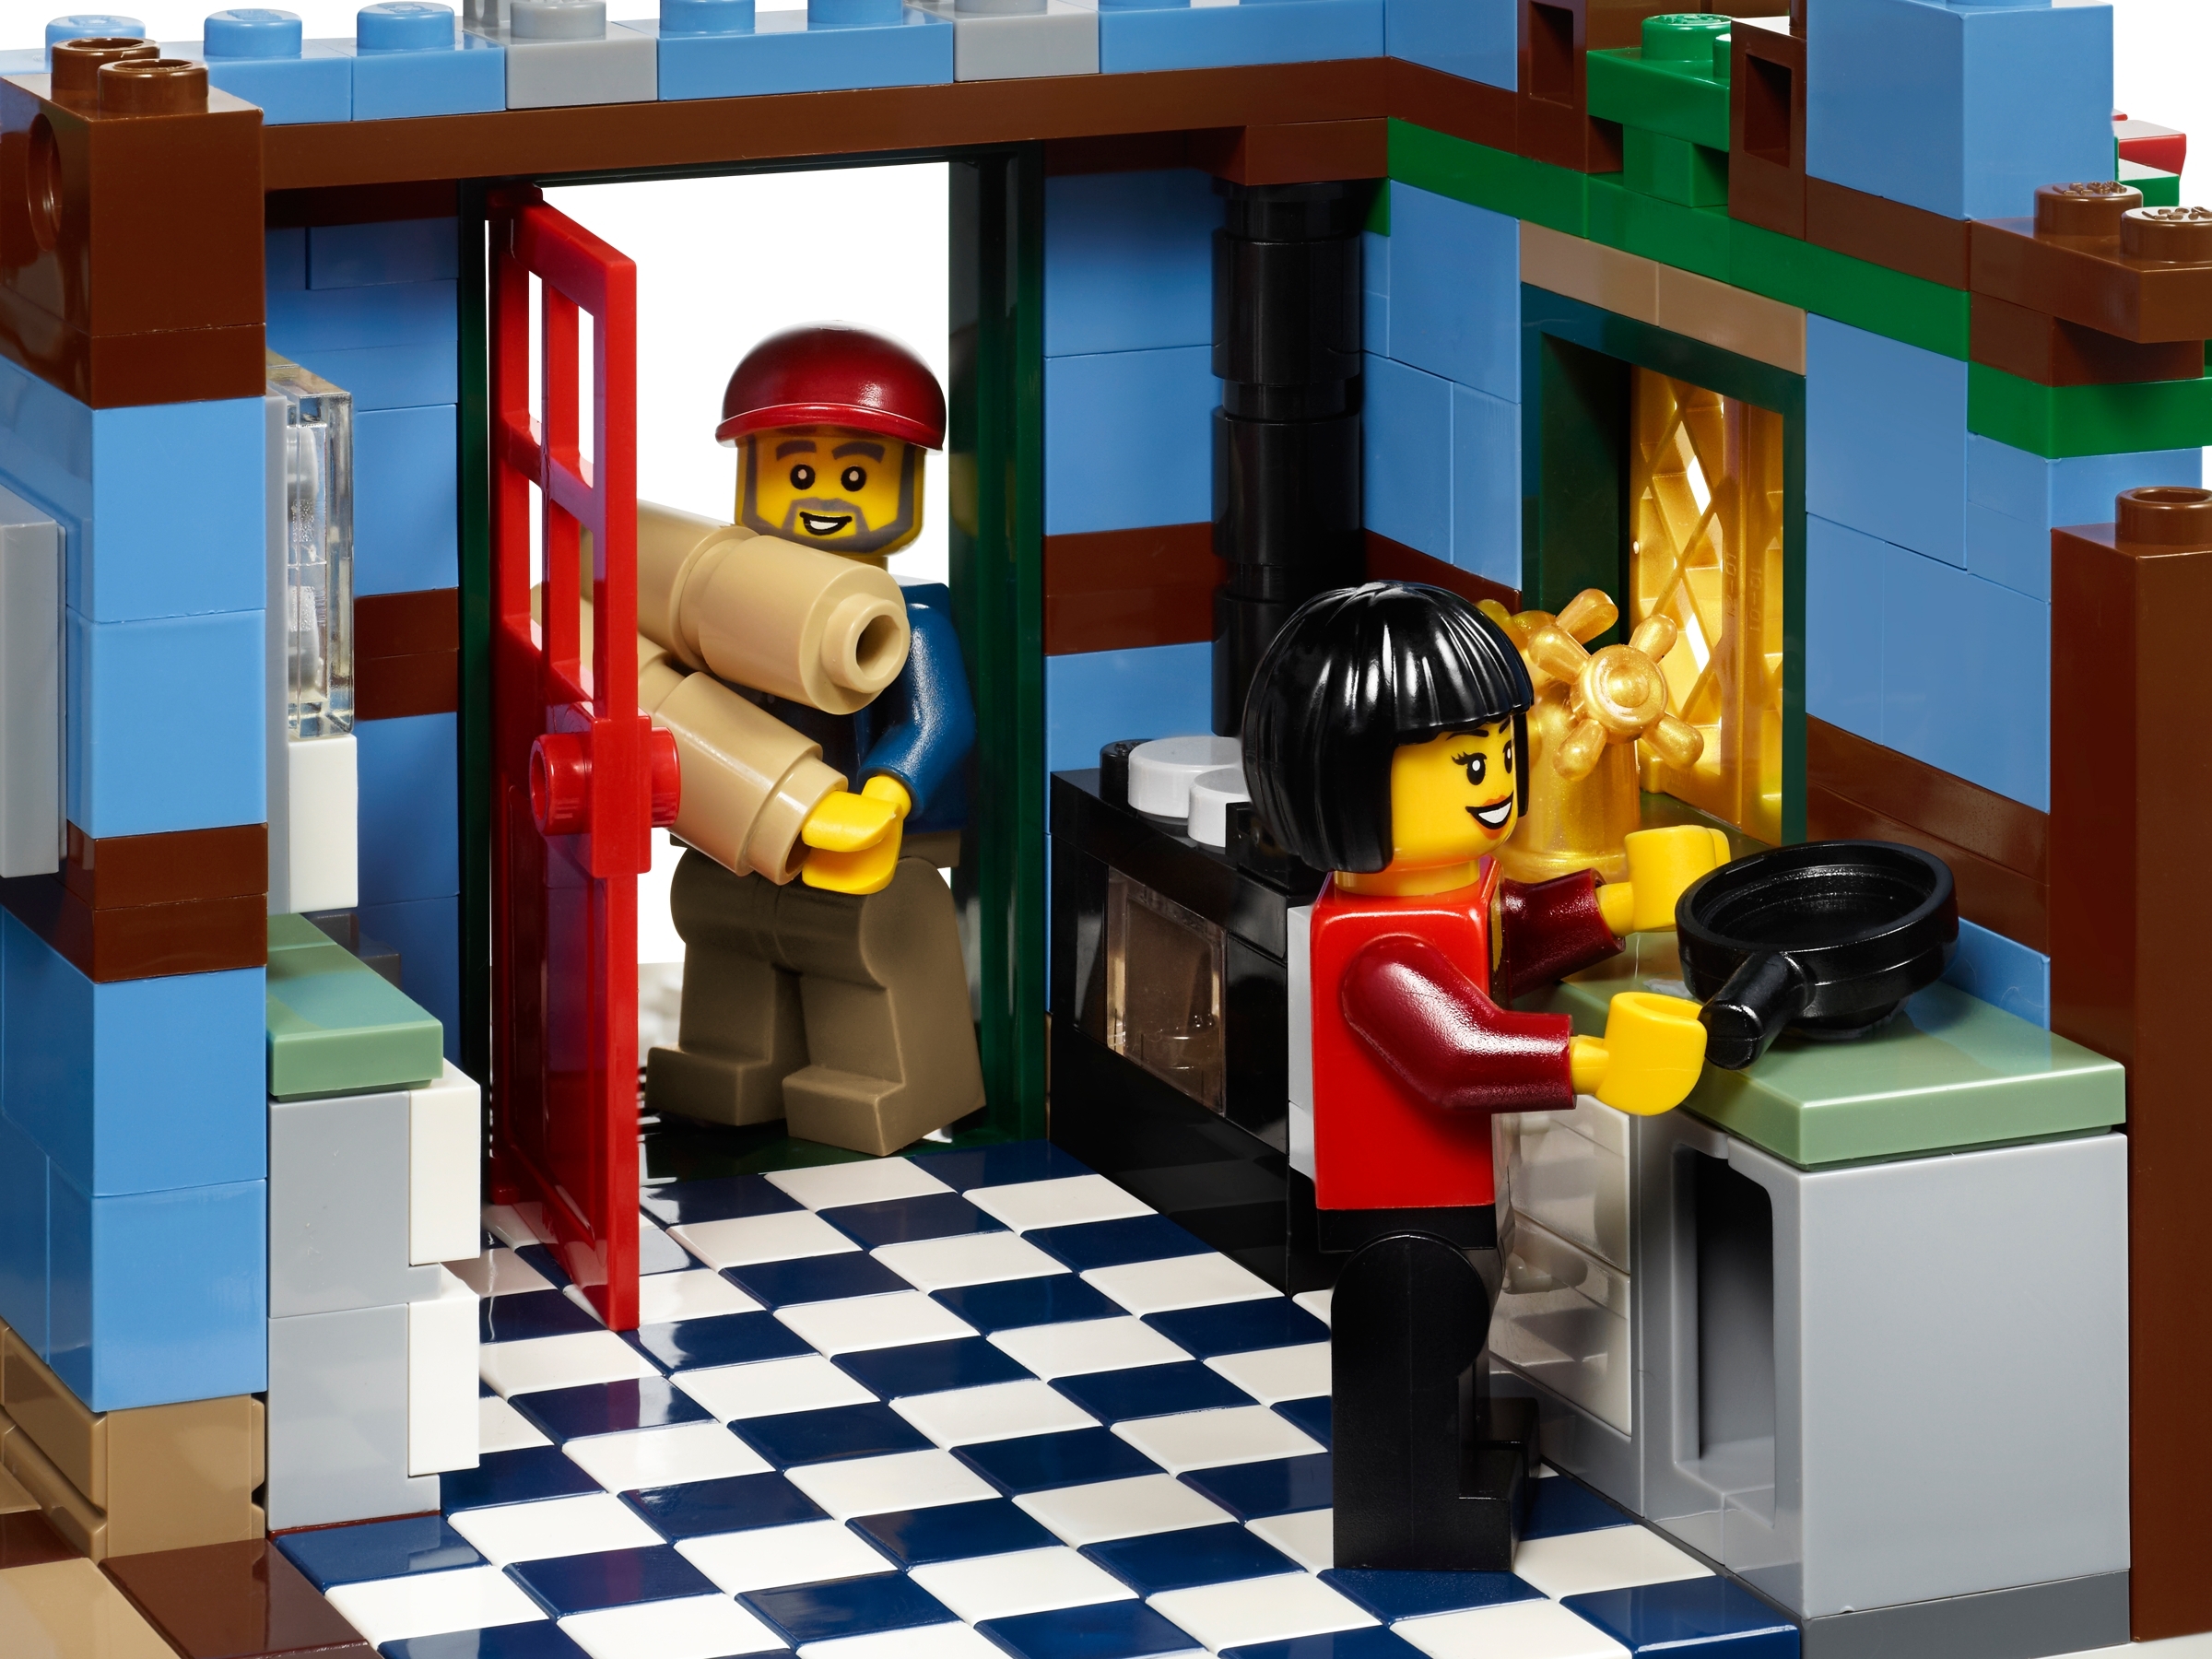 Village Cottage 10229 | Hard to Find Items | online at Official LEGO® Shop US